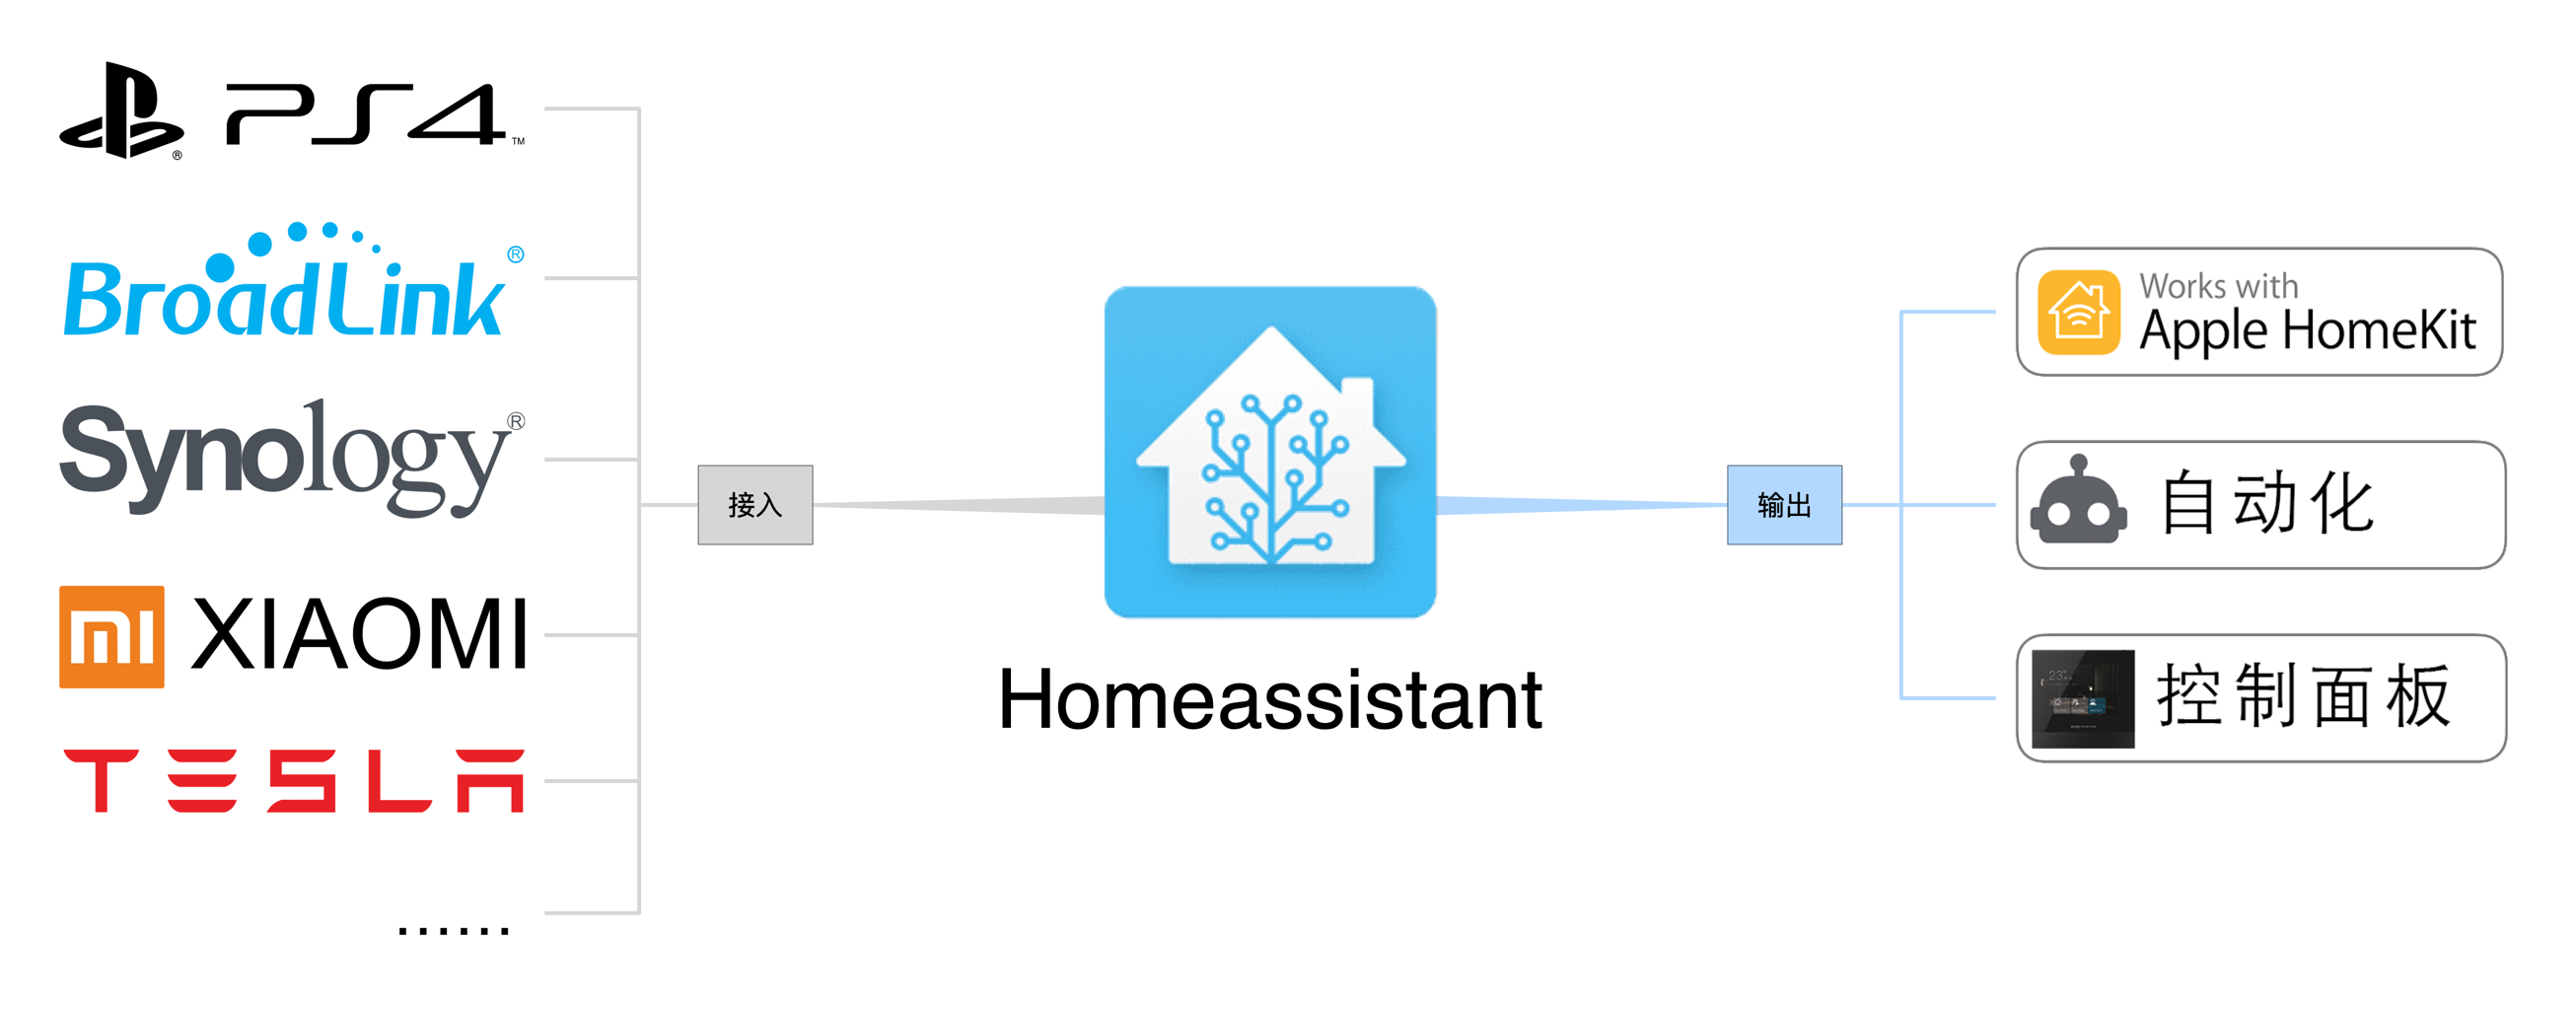 Homeassistant：不仅仅是更优秀的智能家居解决方案